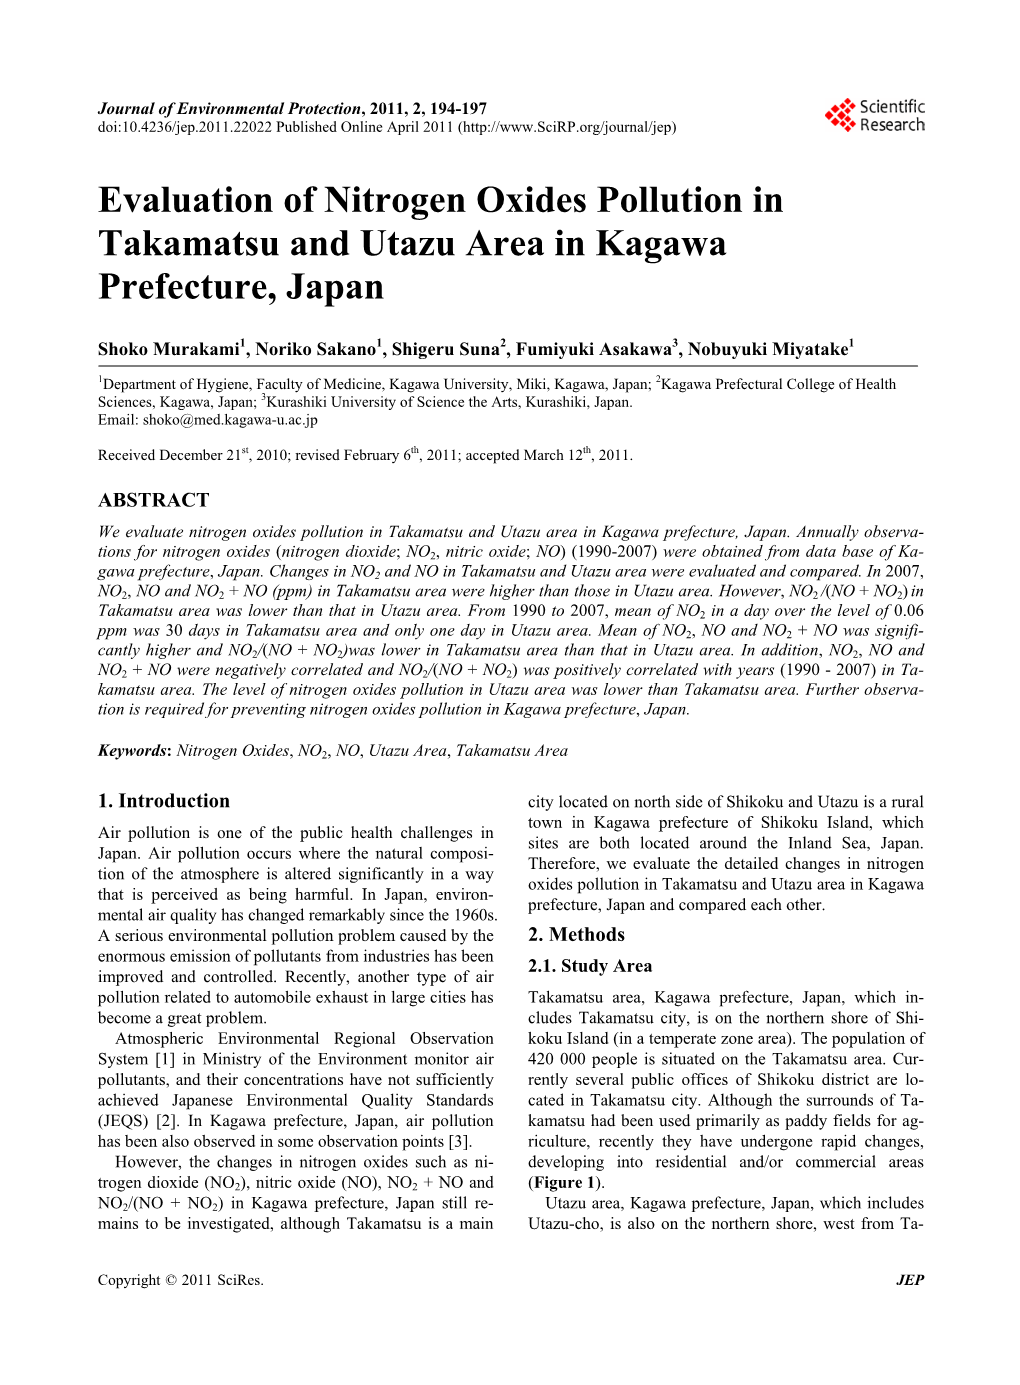 Evaluation of Nitrogen Oxides Pollution in Takamatsu and Utazu Area in Kagawa Prefecture, Japan